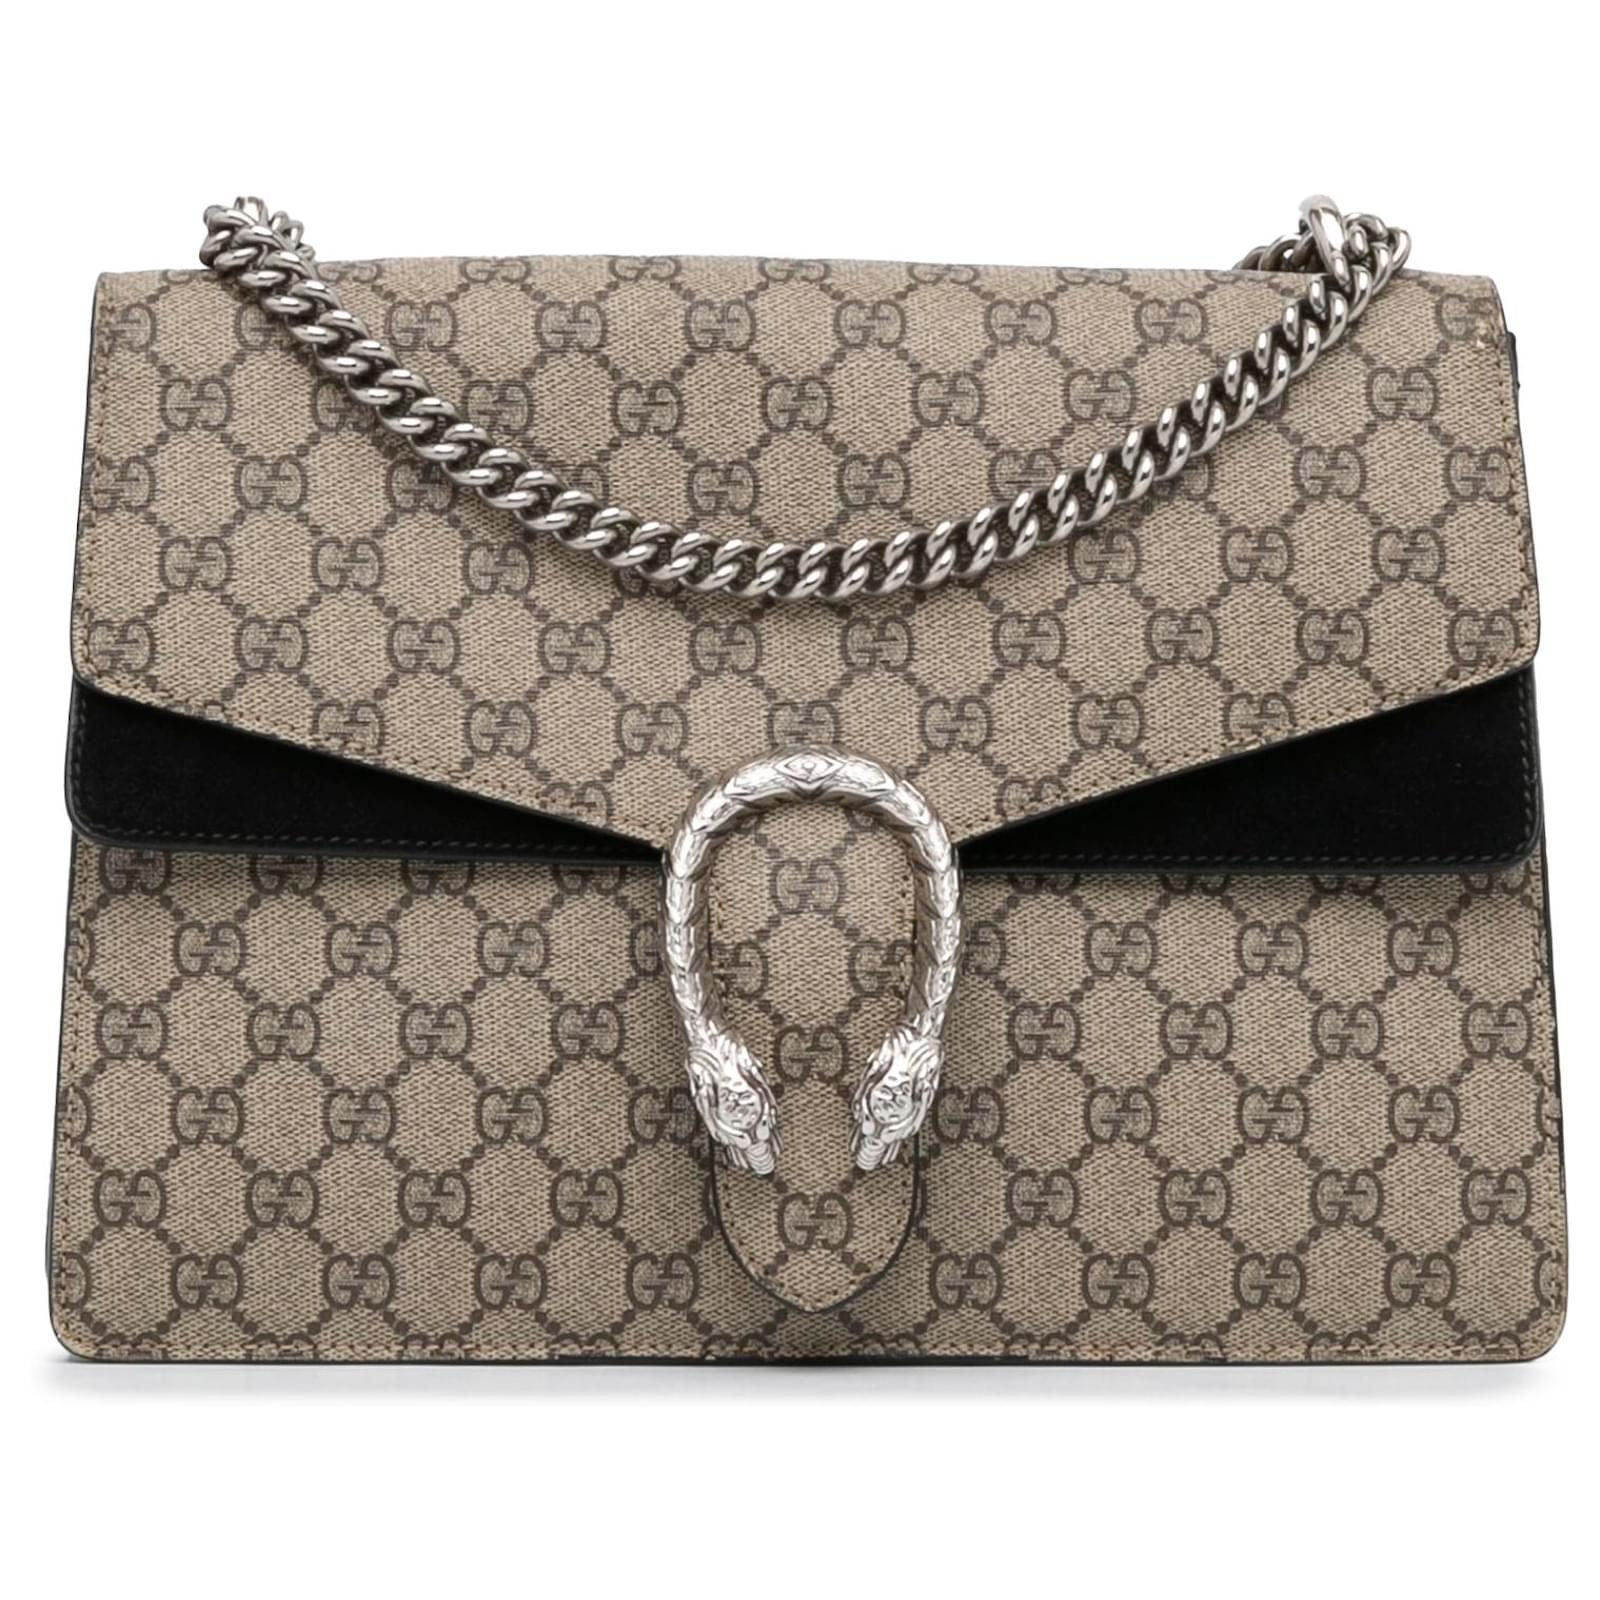 Gucci GG Supreme Dionysus Medium Shoulder Bag